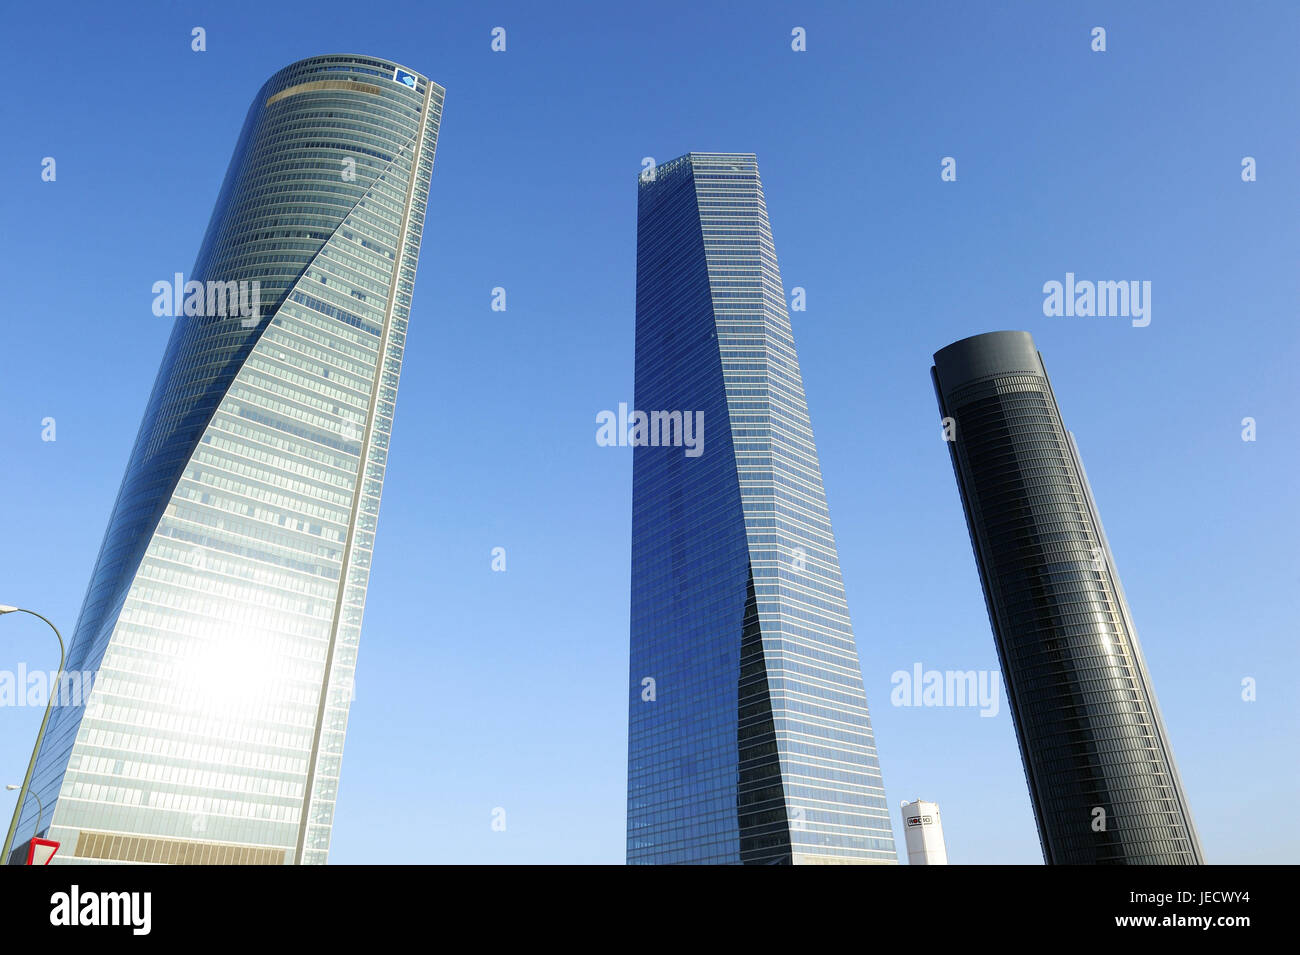 Spain, Madrid, Torre Espacio, Torre de Cristal, Torre Sacyr Vallehermoso, Stock Photo